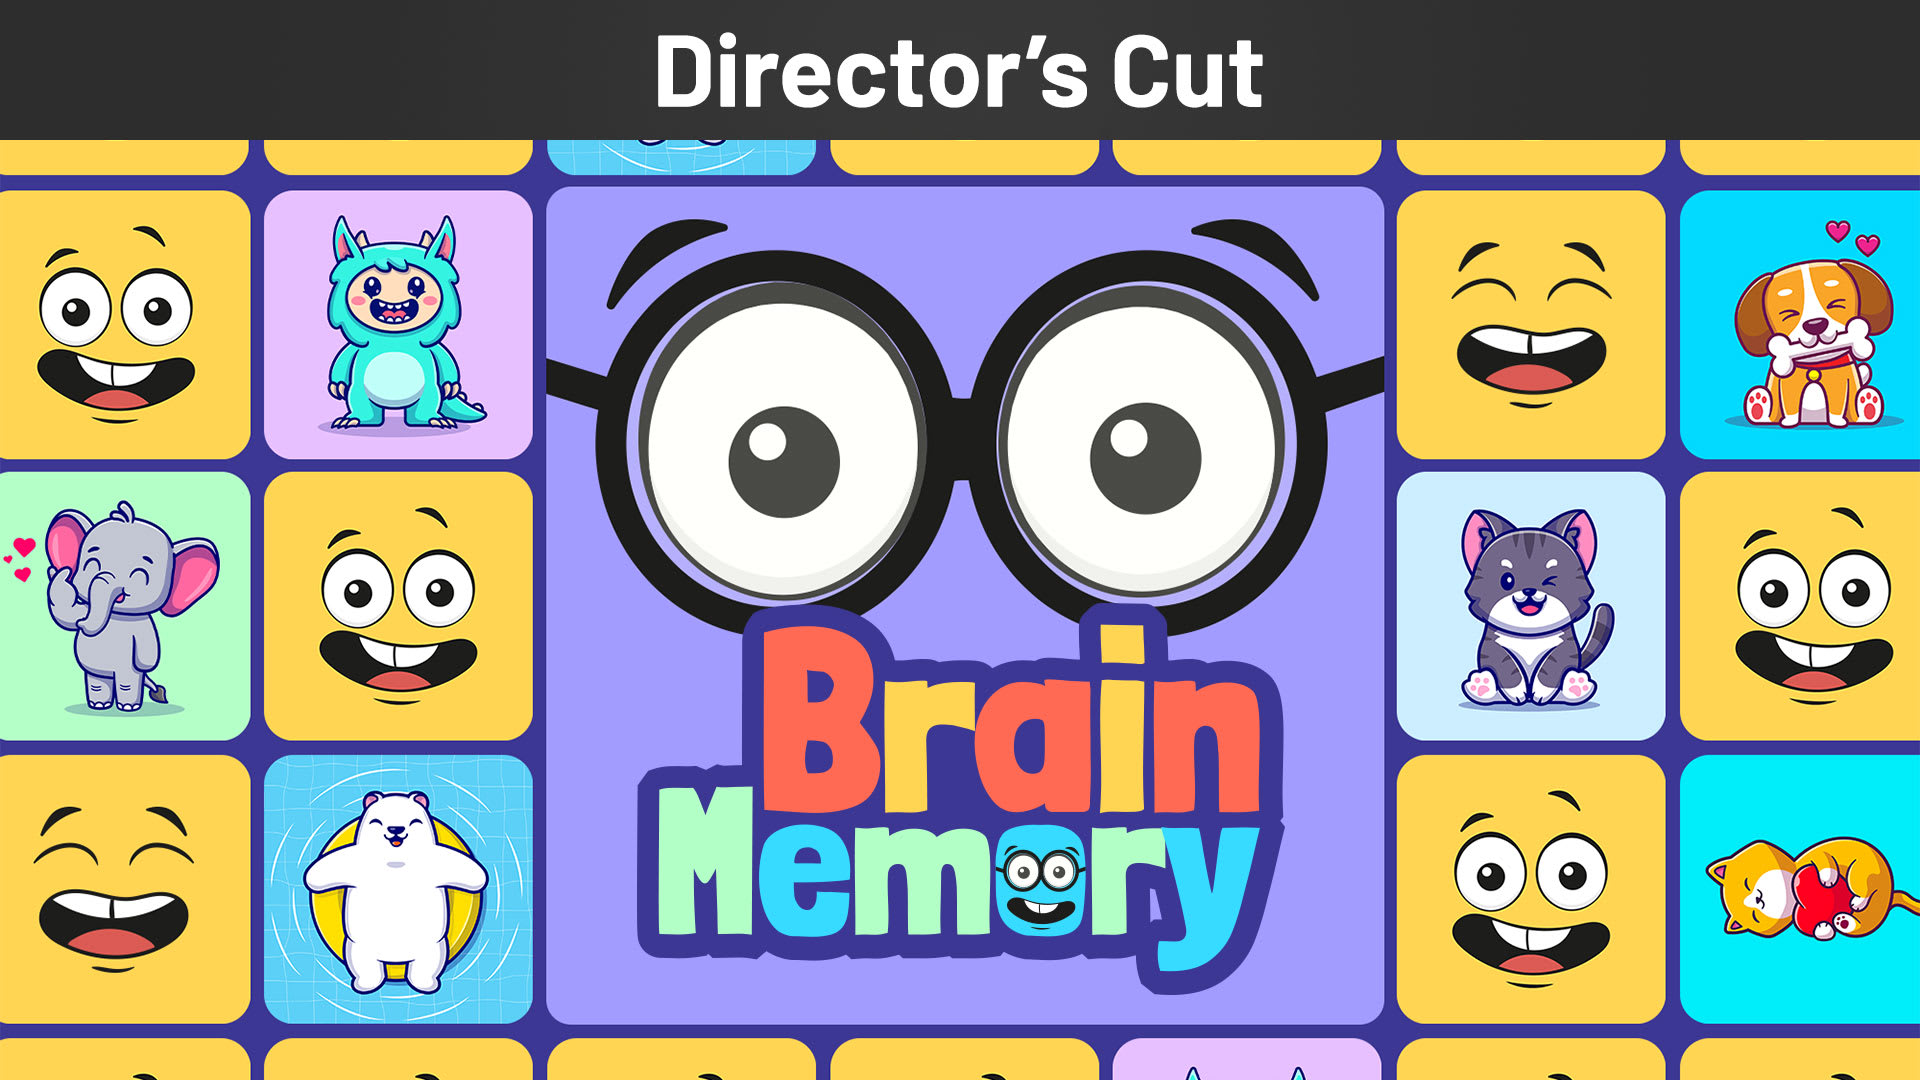 Brain Memory Director's Cut